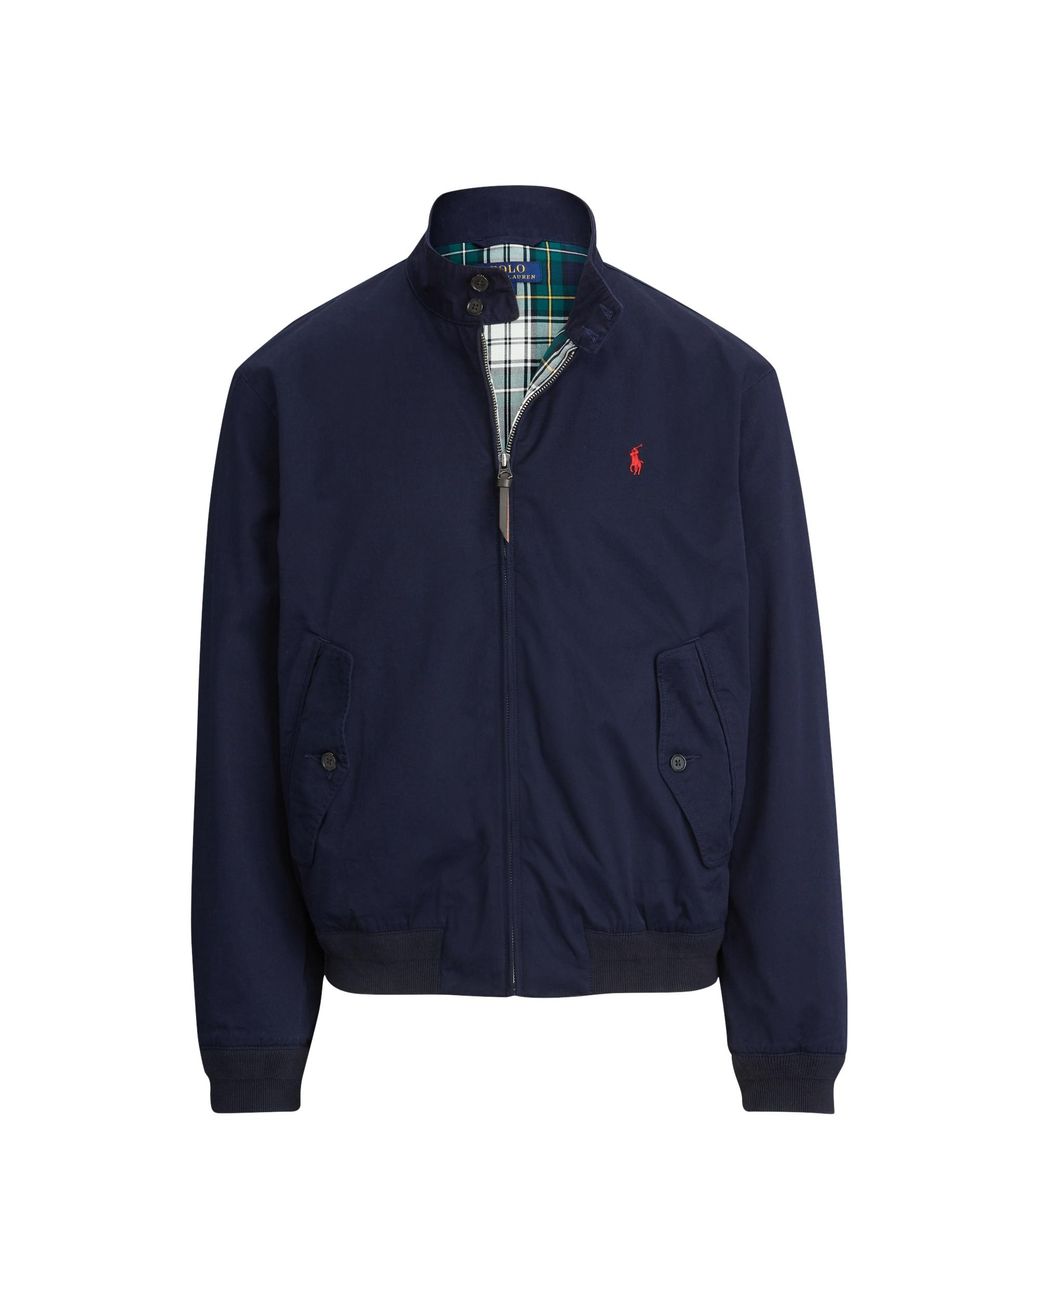 Ralph Lauren Cotton Twill Jacket in Blue for Men - Save 3% - Lyst